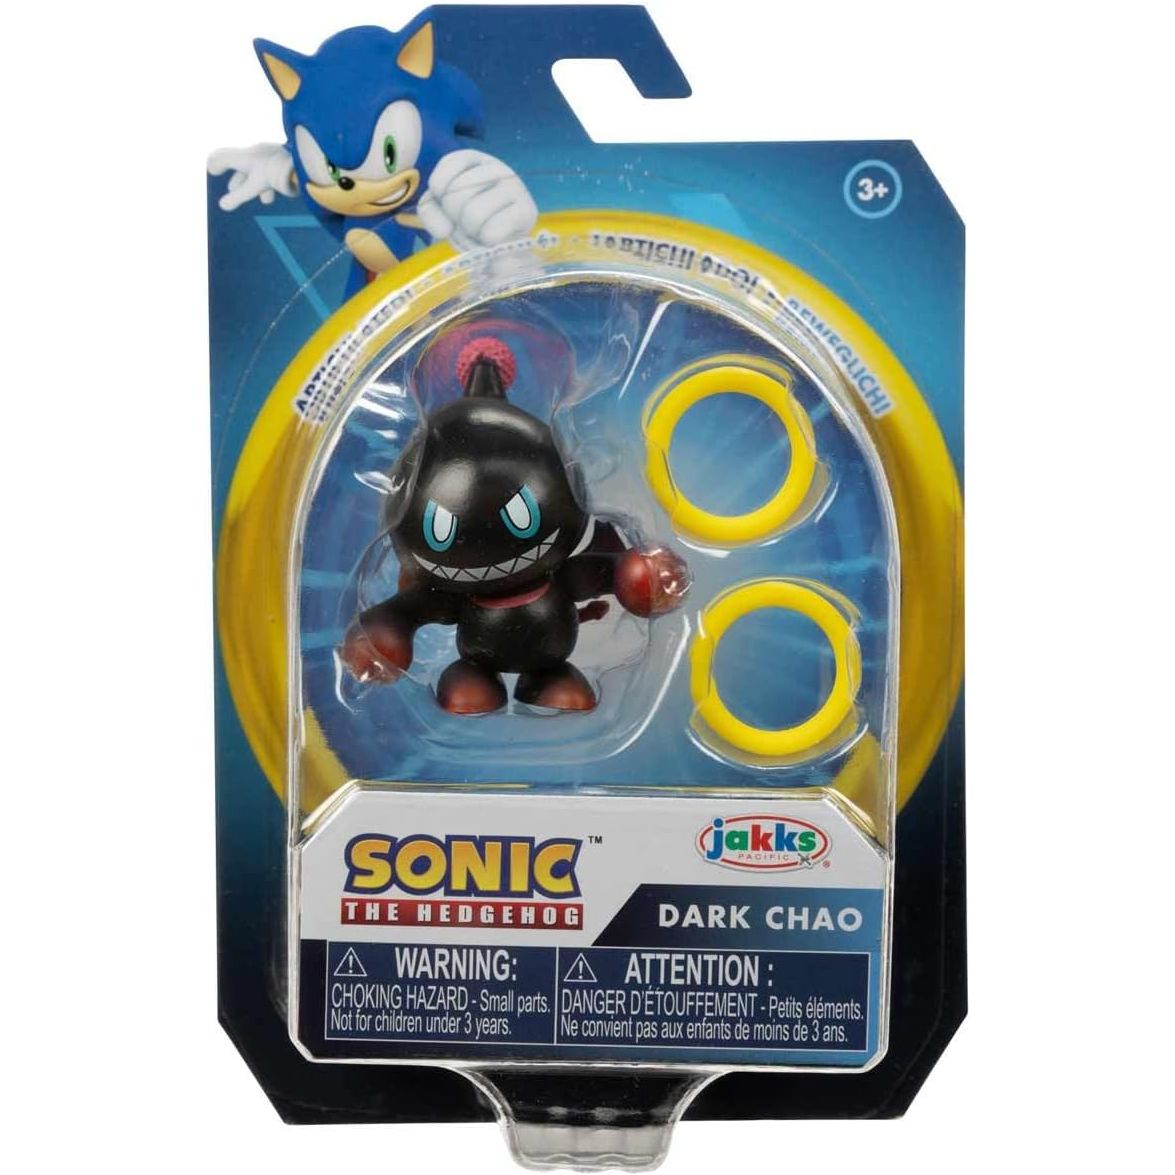 Sonic the Hedgehog Dark Chao Mini Action Figure by Jakks